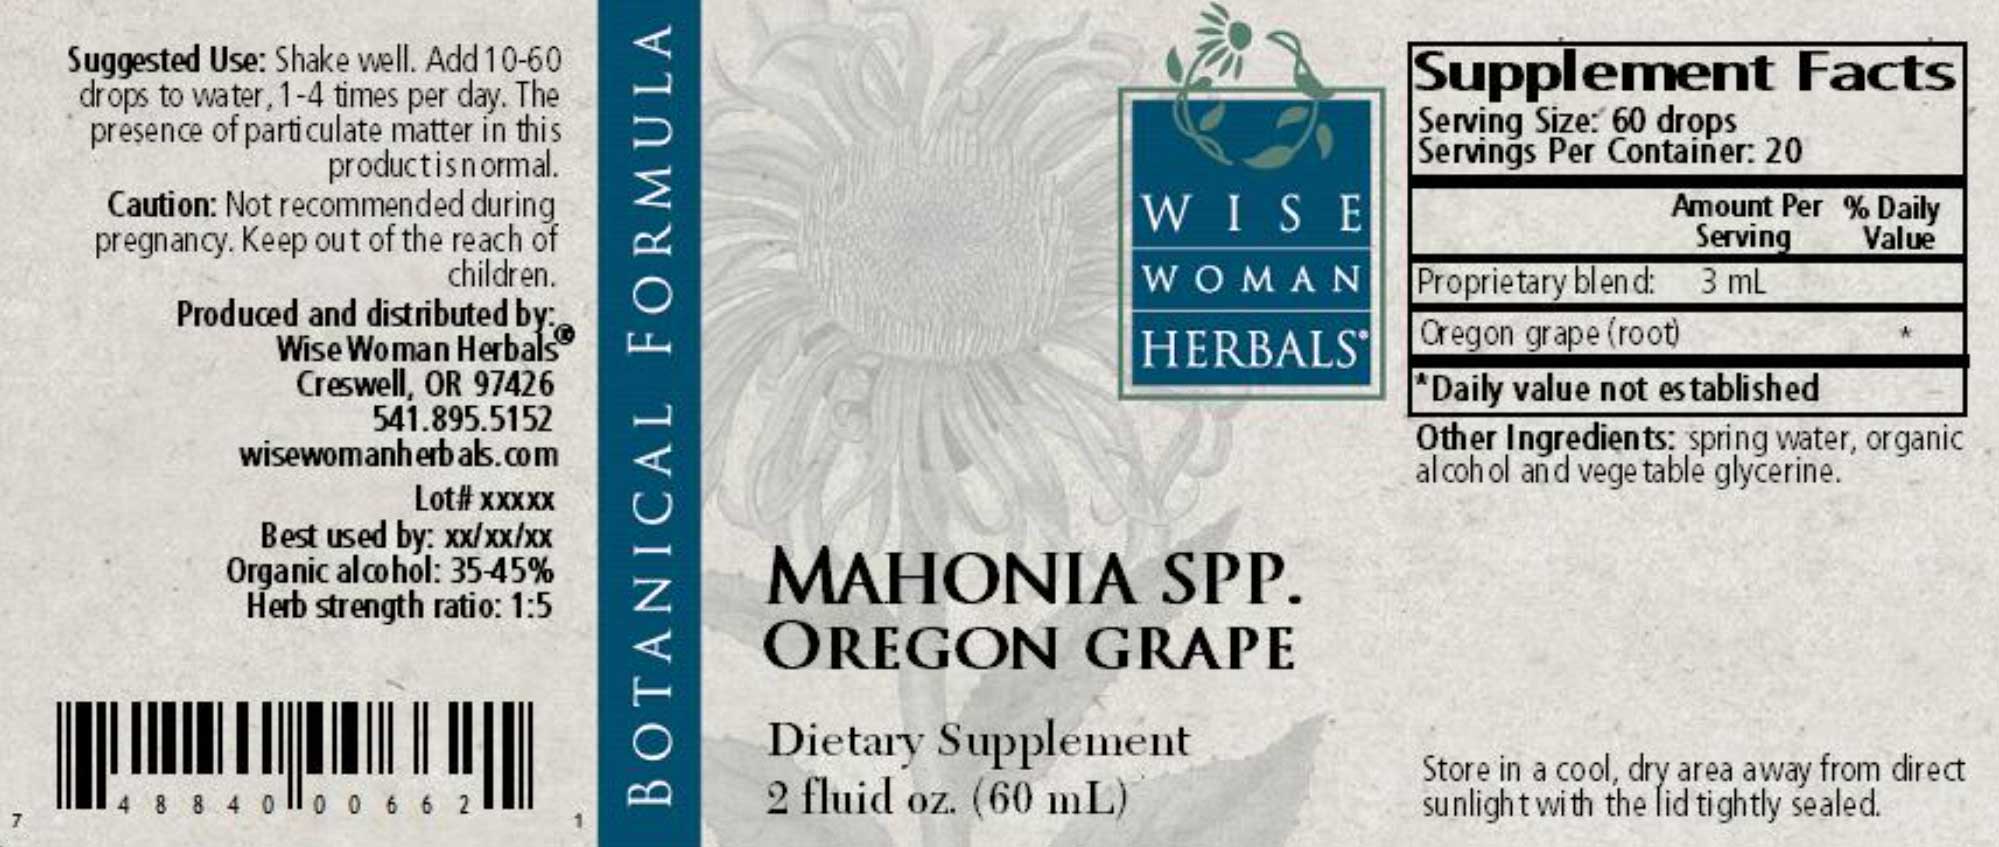 Wise Woman Herbals Mahonia Spp Oregon Grape Label